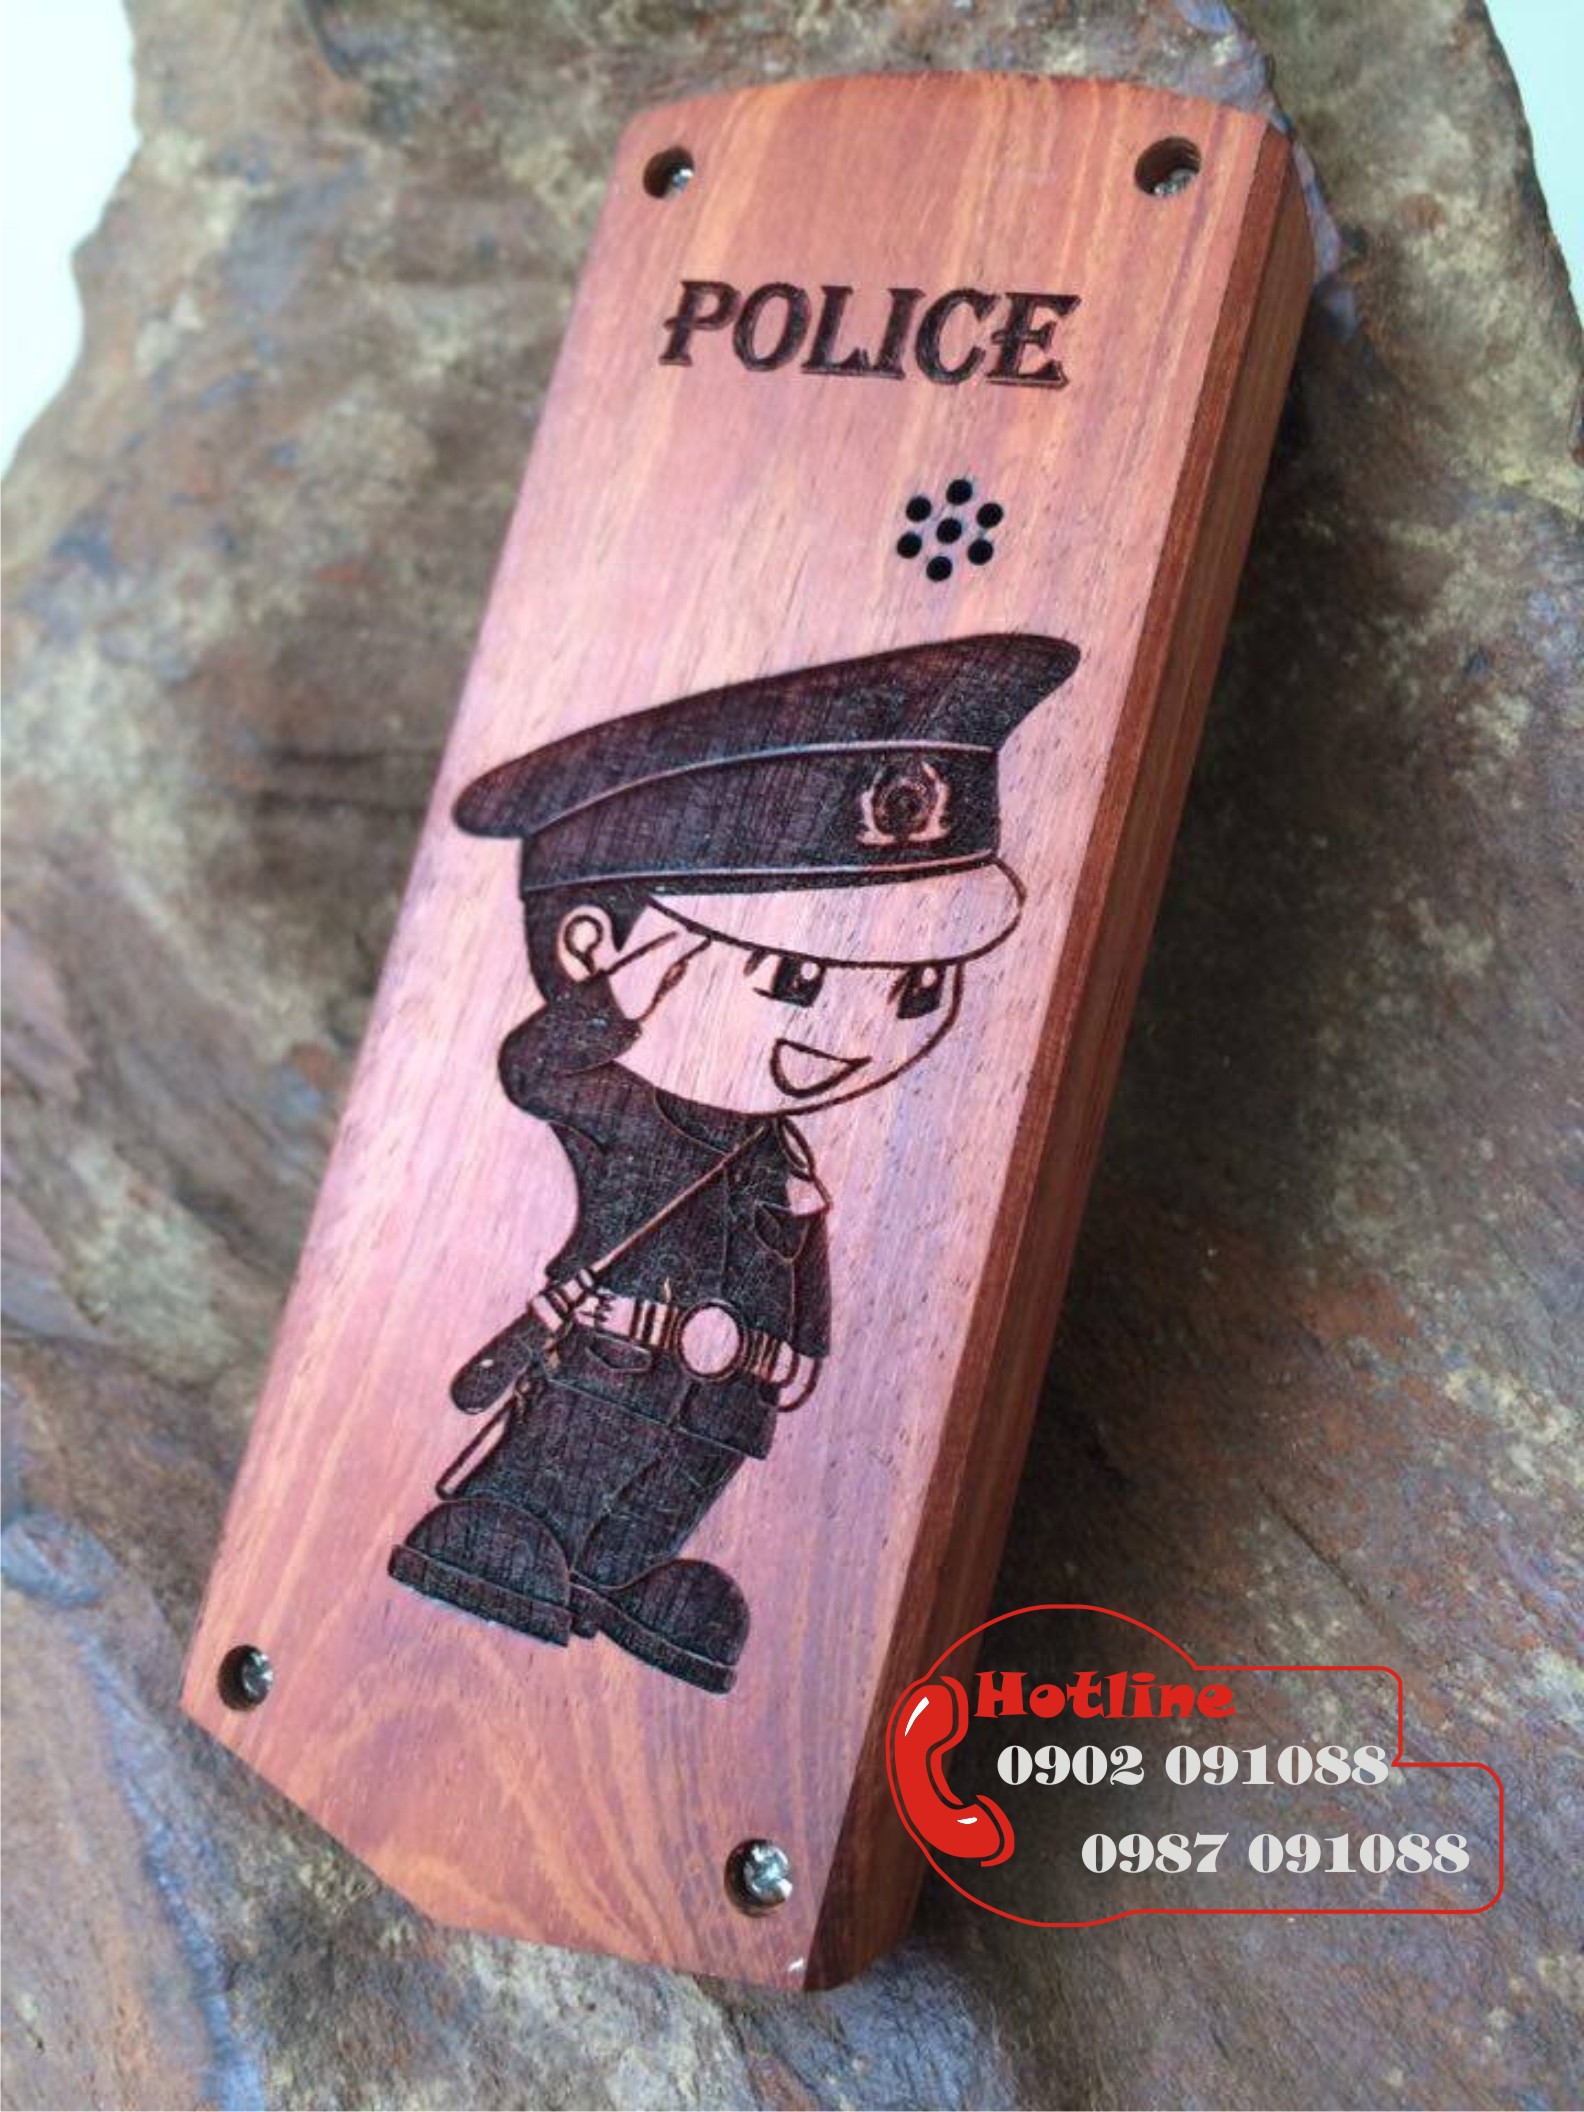 vo-go-dien-thoai-police